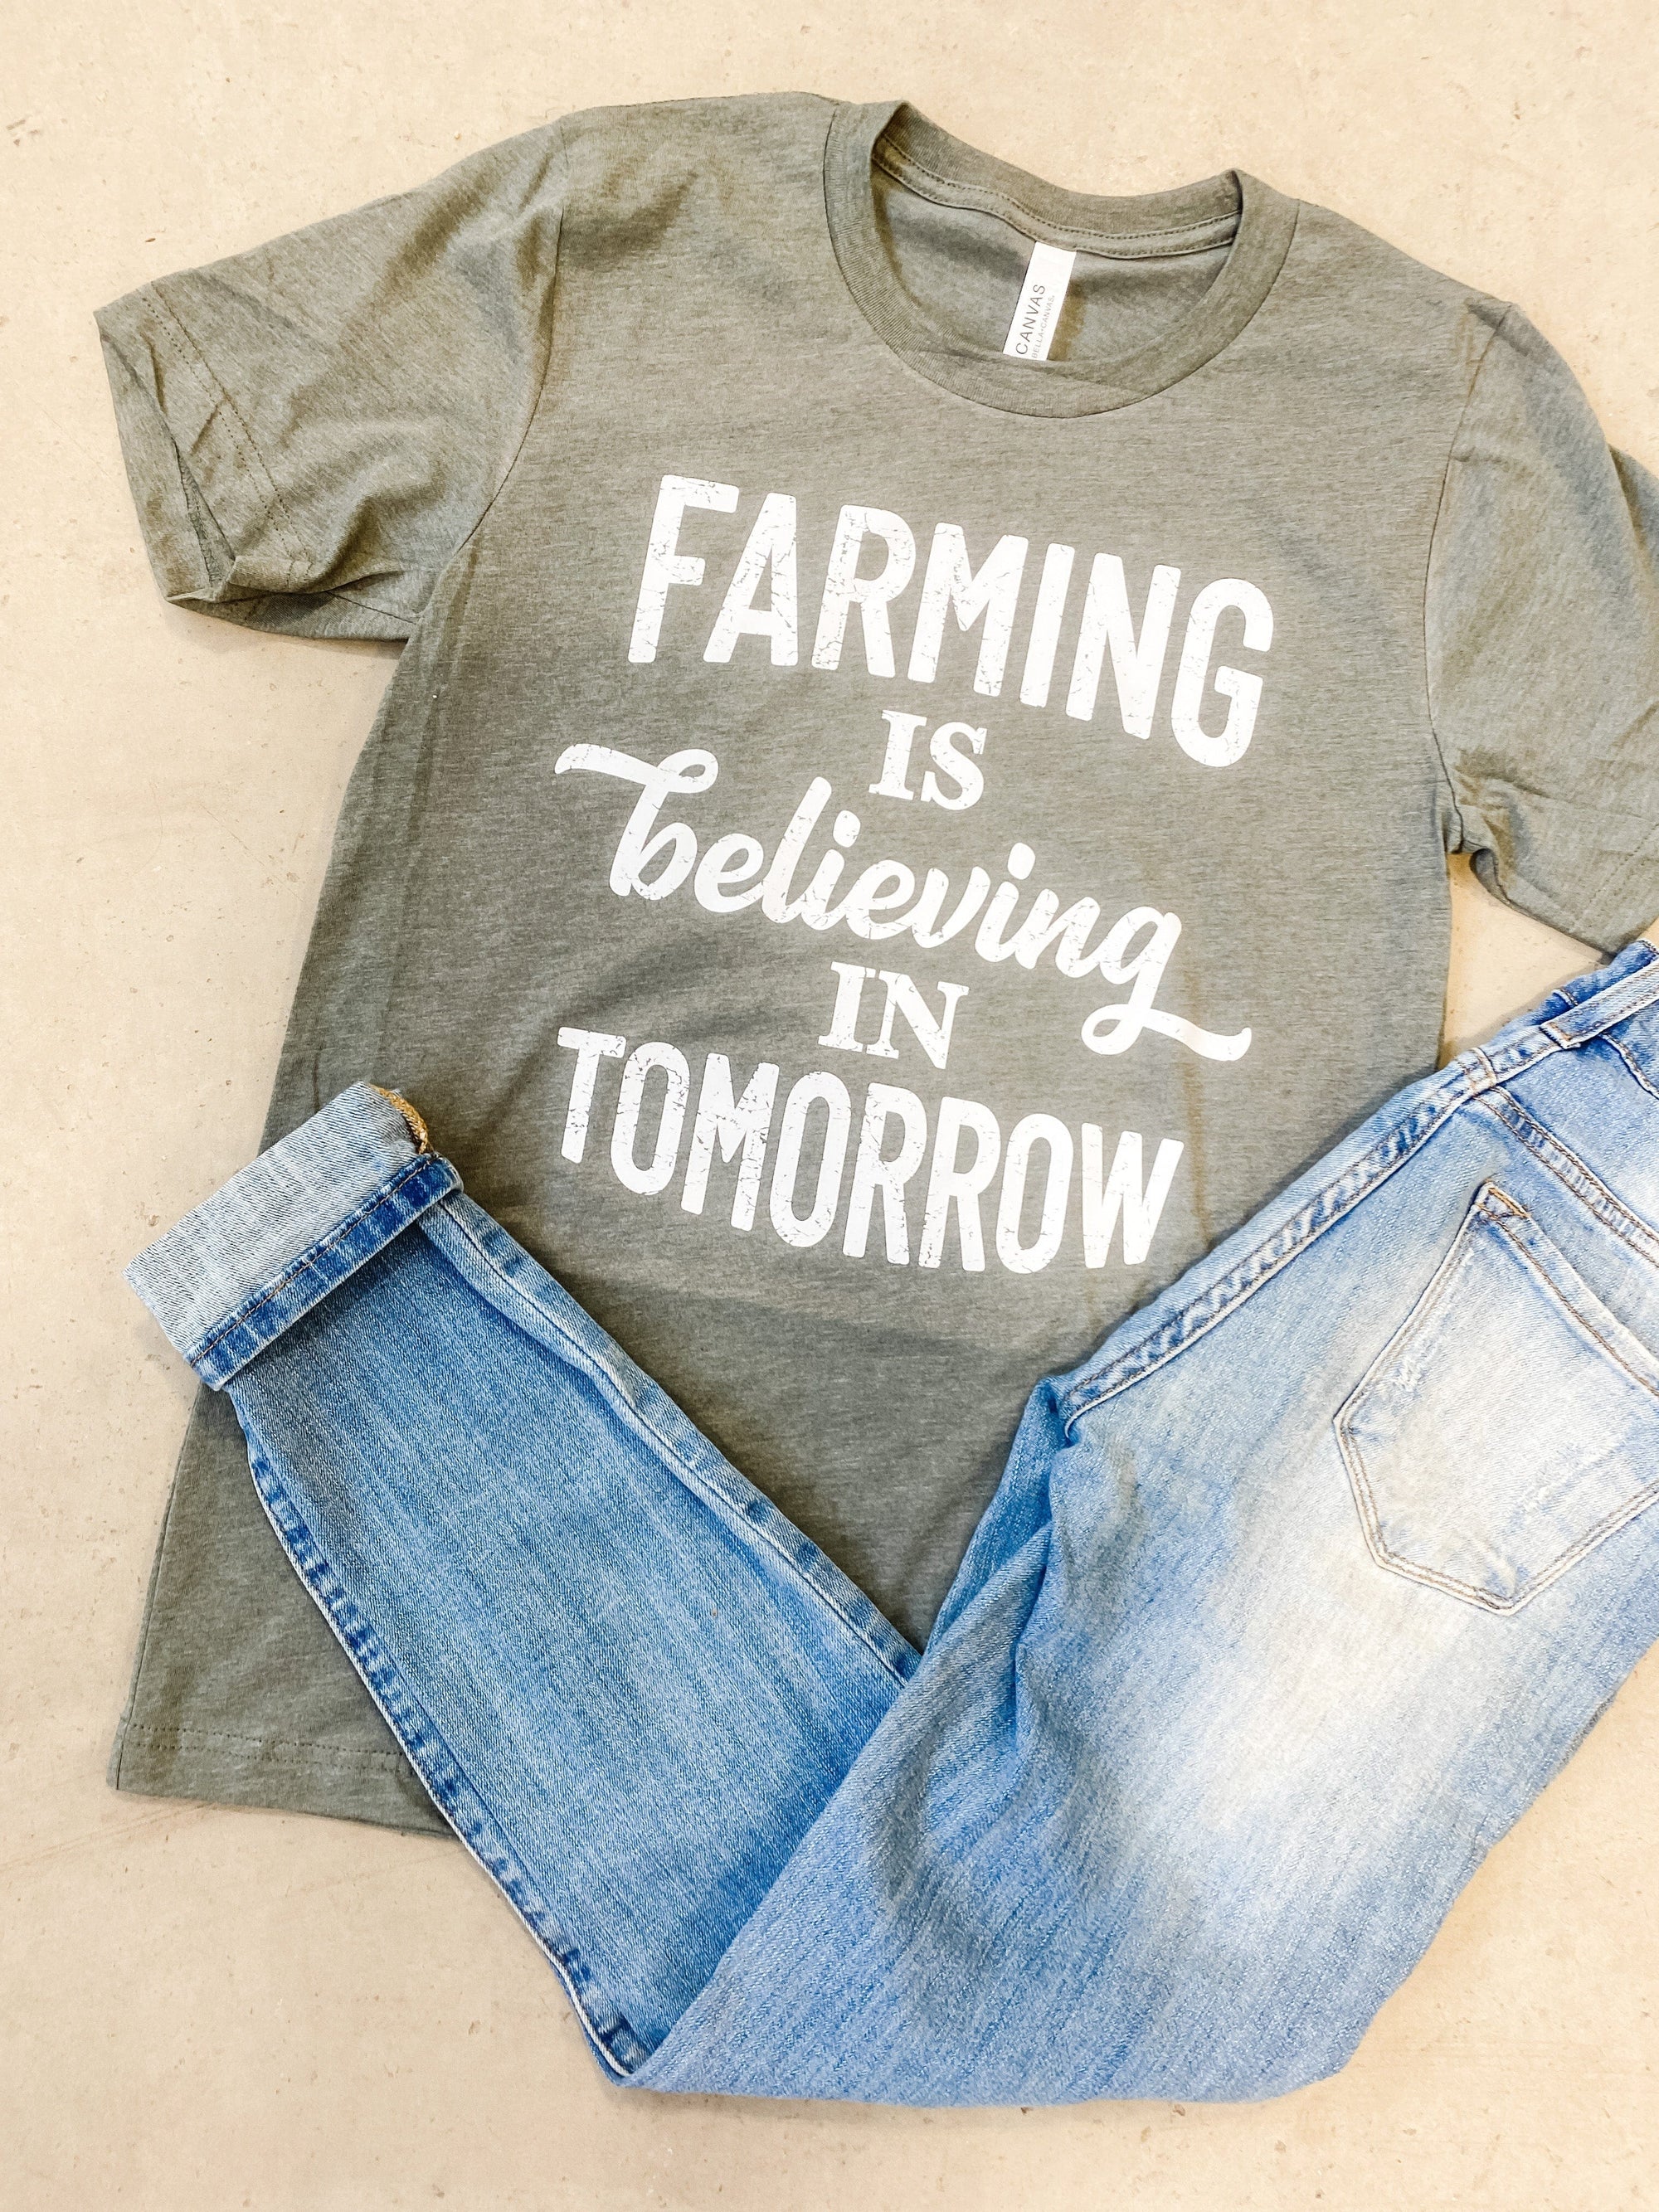 American Farm Company Shirts 'Farming is Believing in Tomorrow' tee